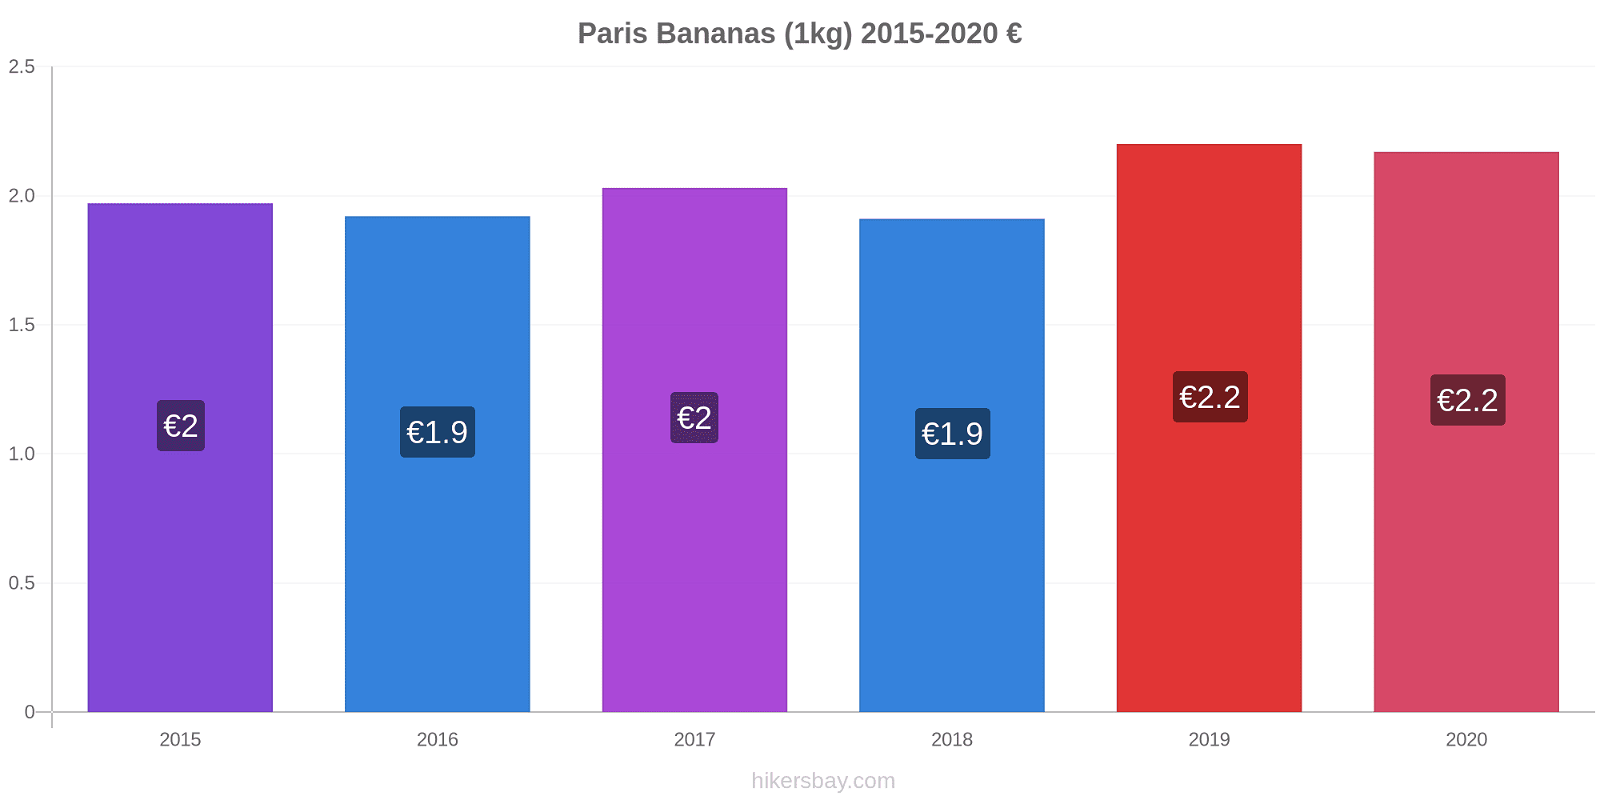 Paris price changes Bananas (1kg) hikersbay.com